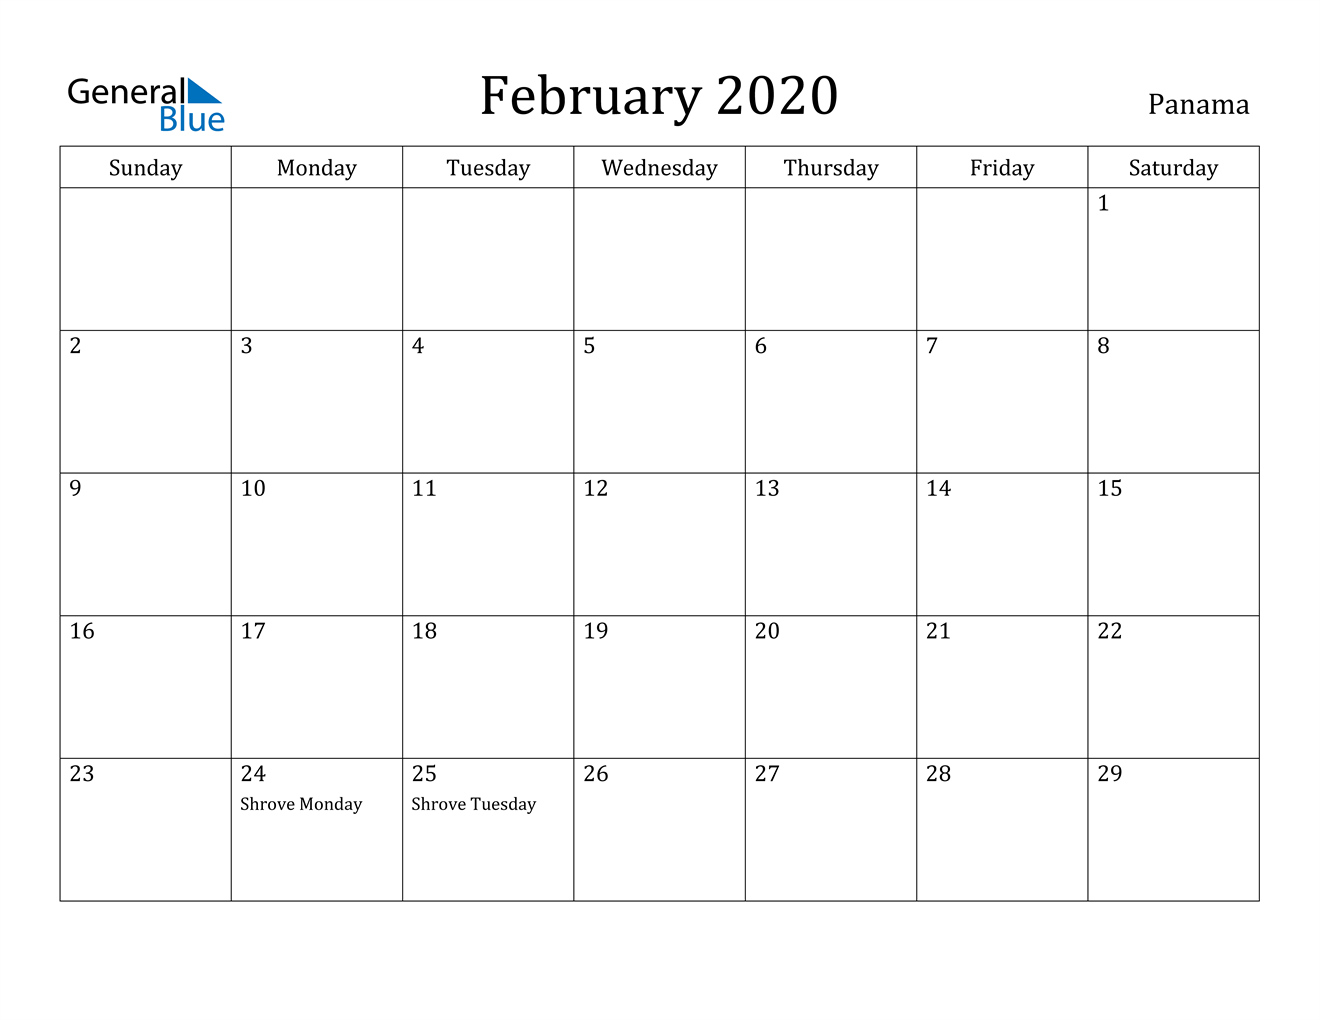 February 2020 Calendar - Panama